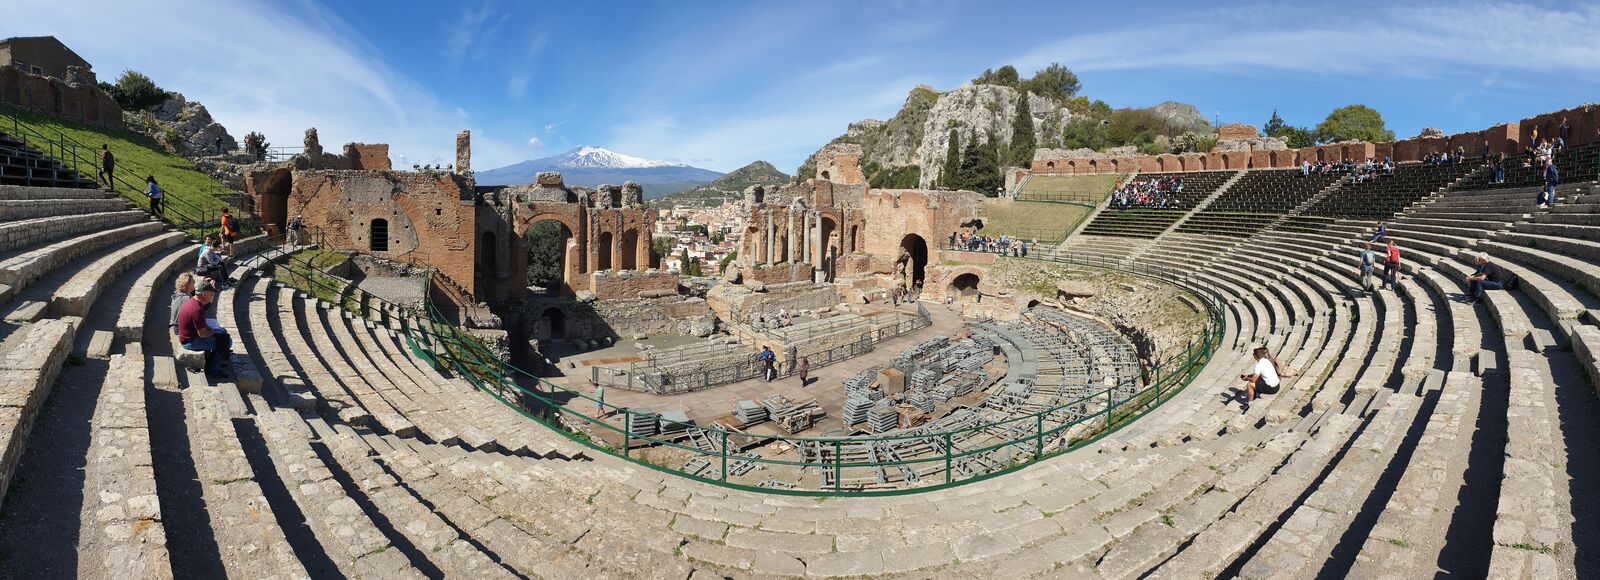 Taormina’s Greek amphitheater has a view of Etna.